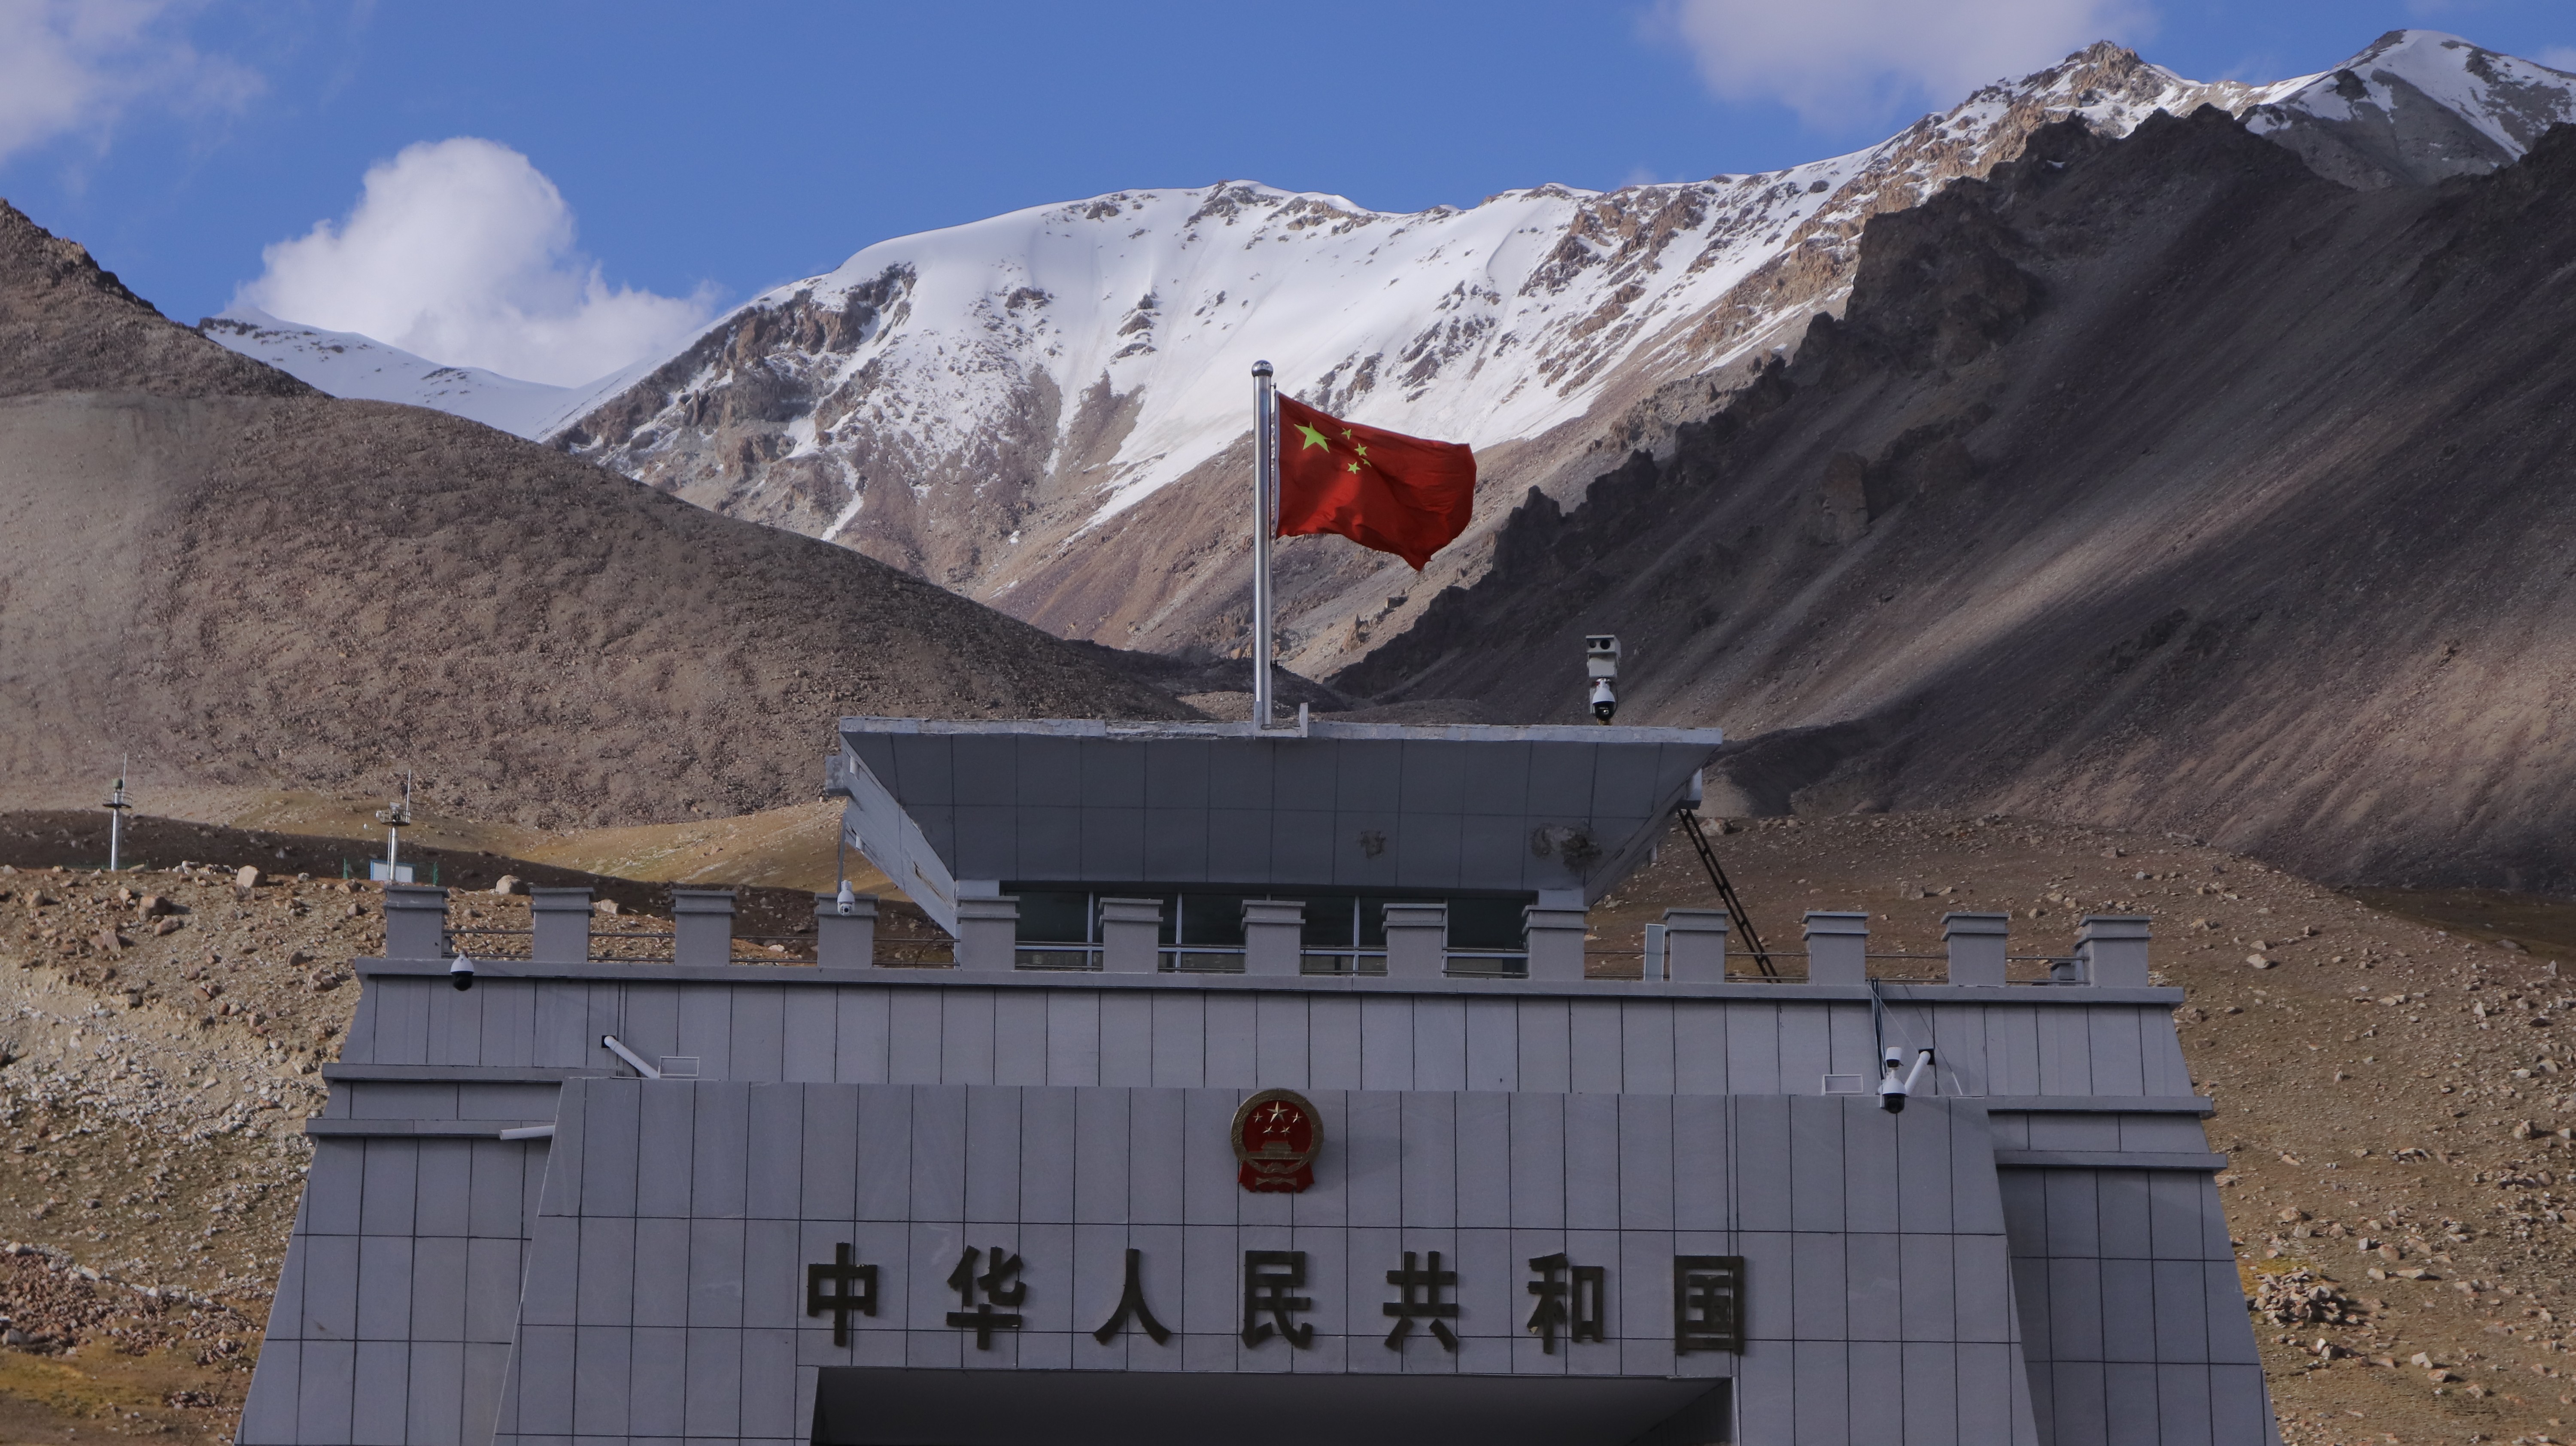 Pakistan-China border crossing at Khunjerab Pass located at 4,600 meters above sea level